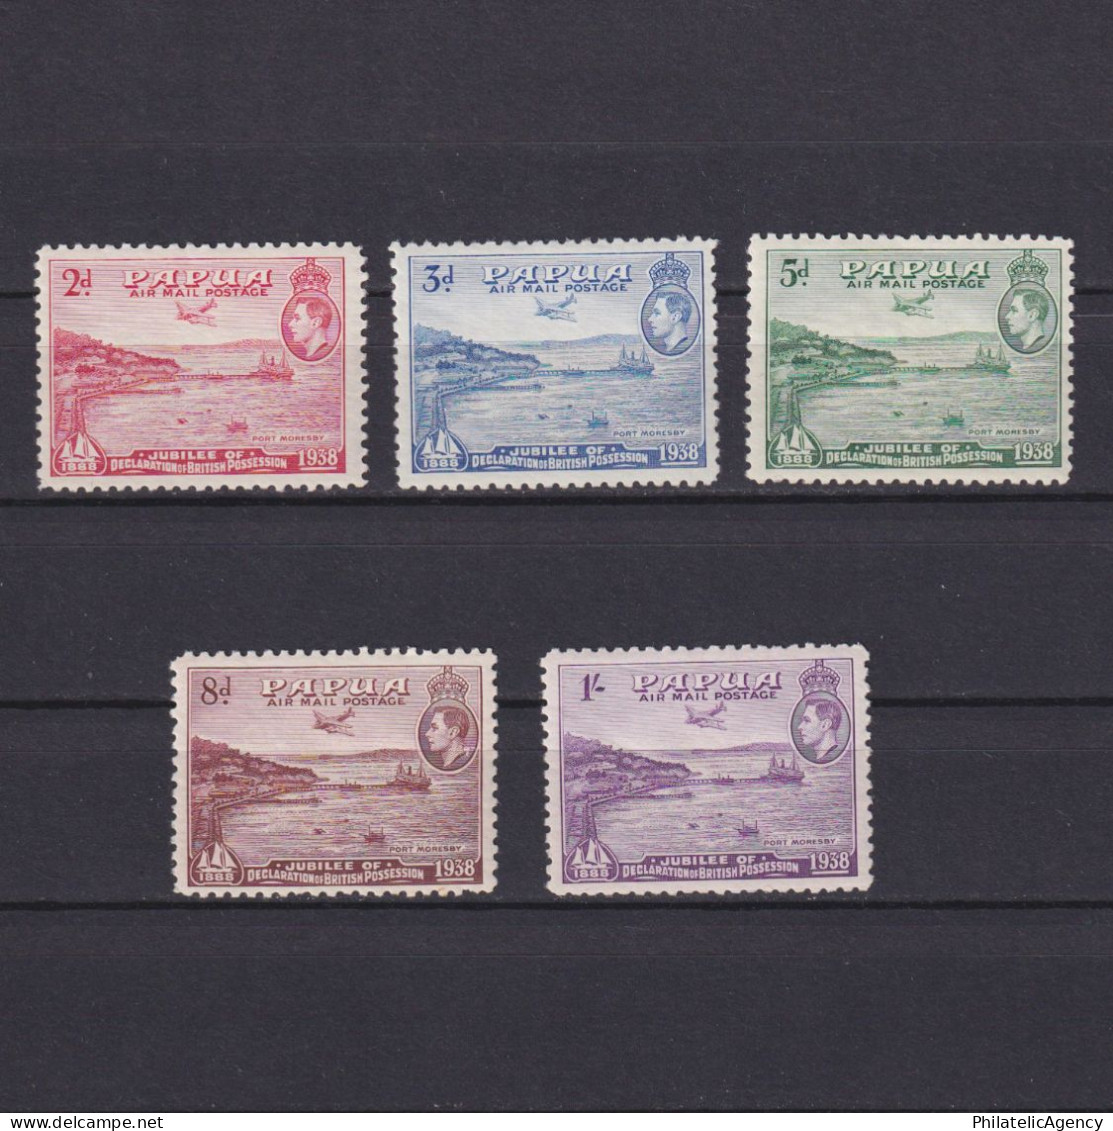 PAPUA 1938, SG #158-162, CV £35, MH - Papua New Guinea